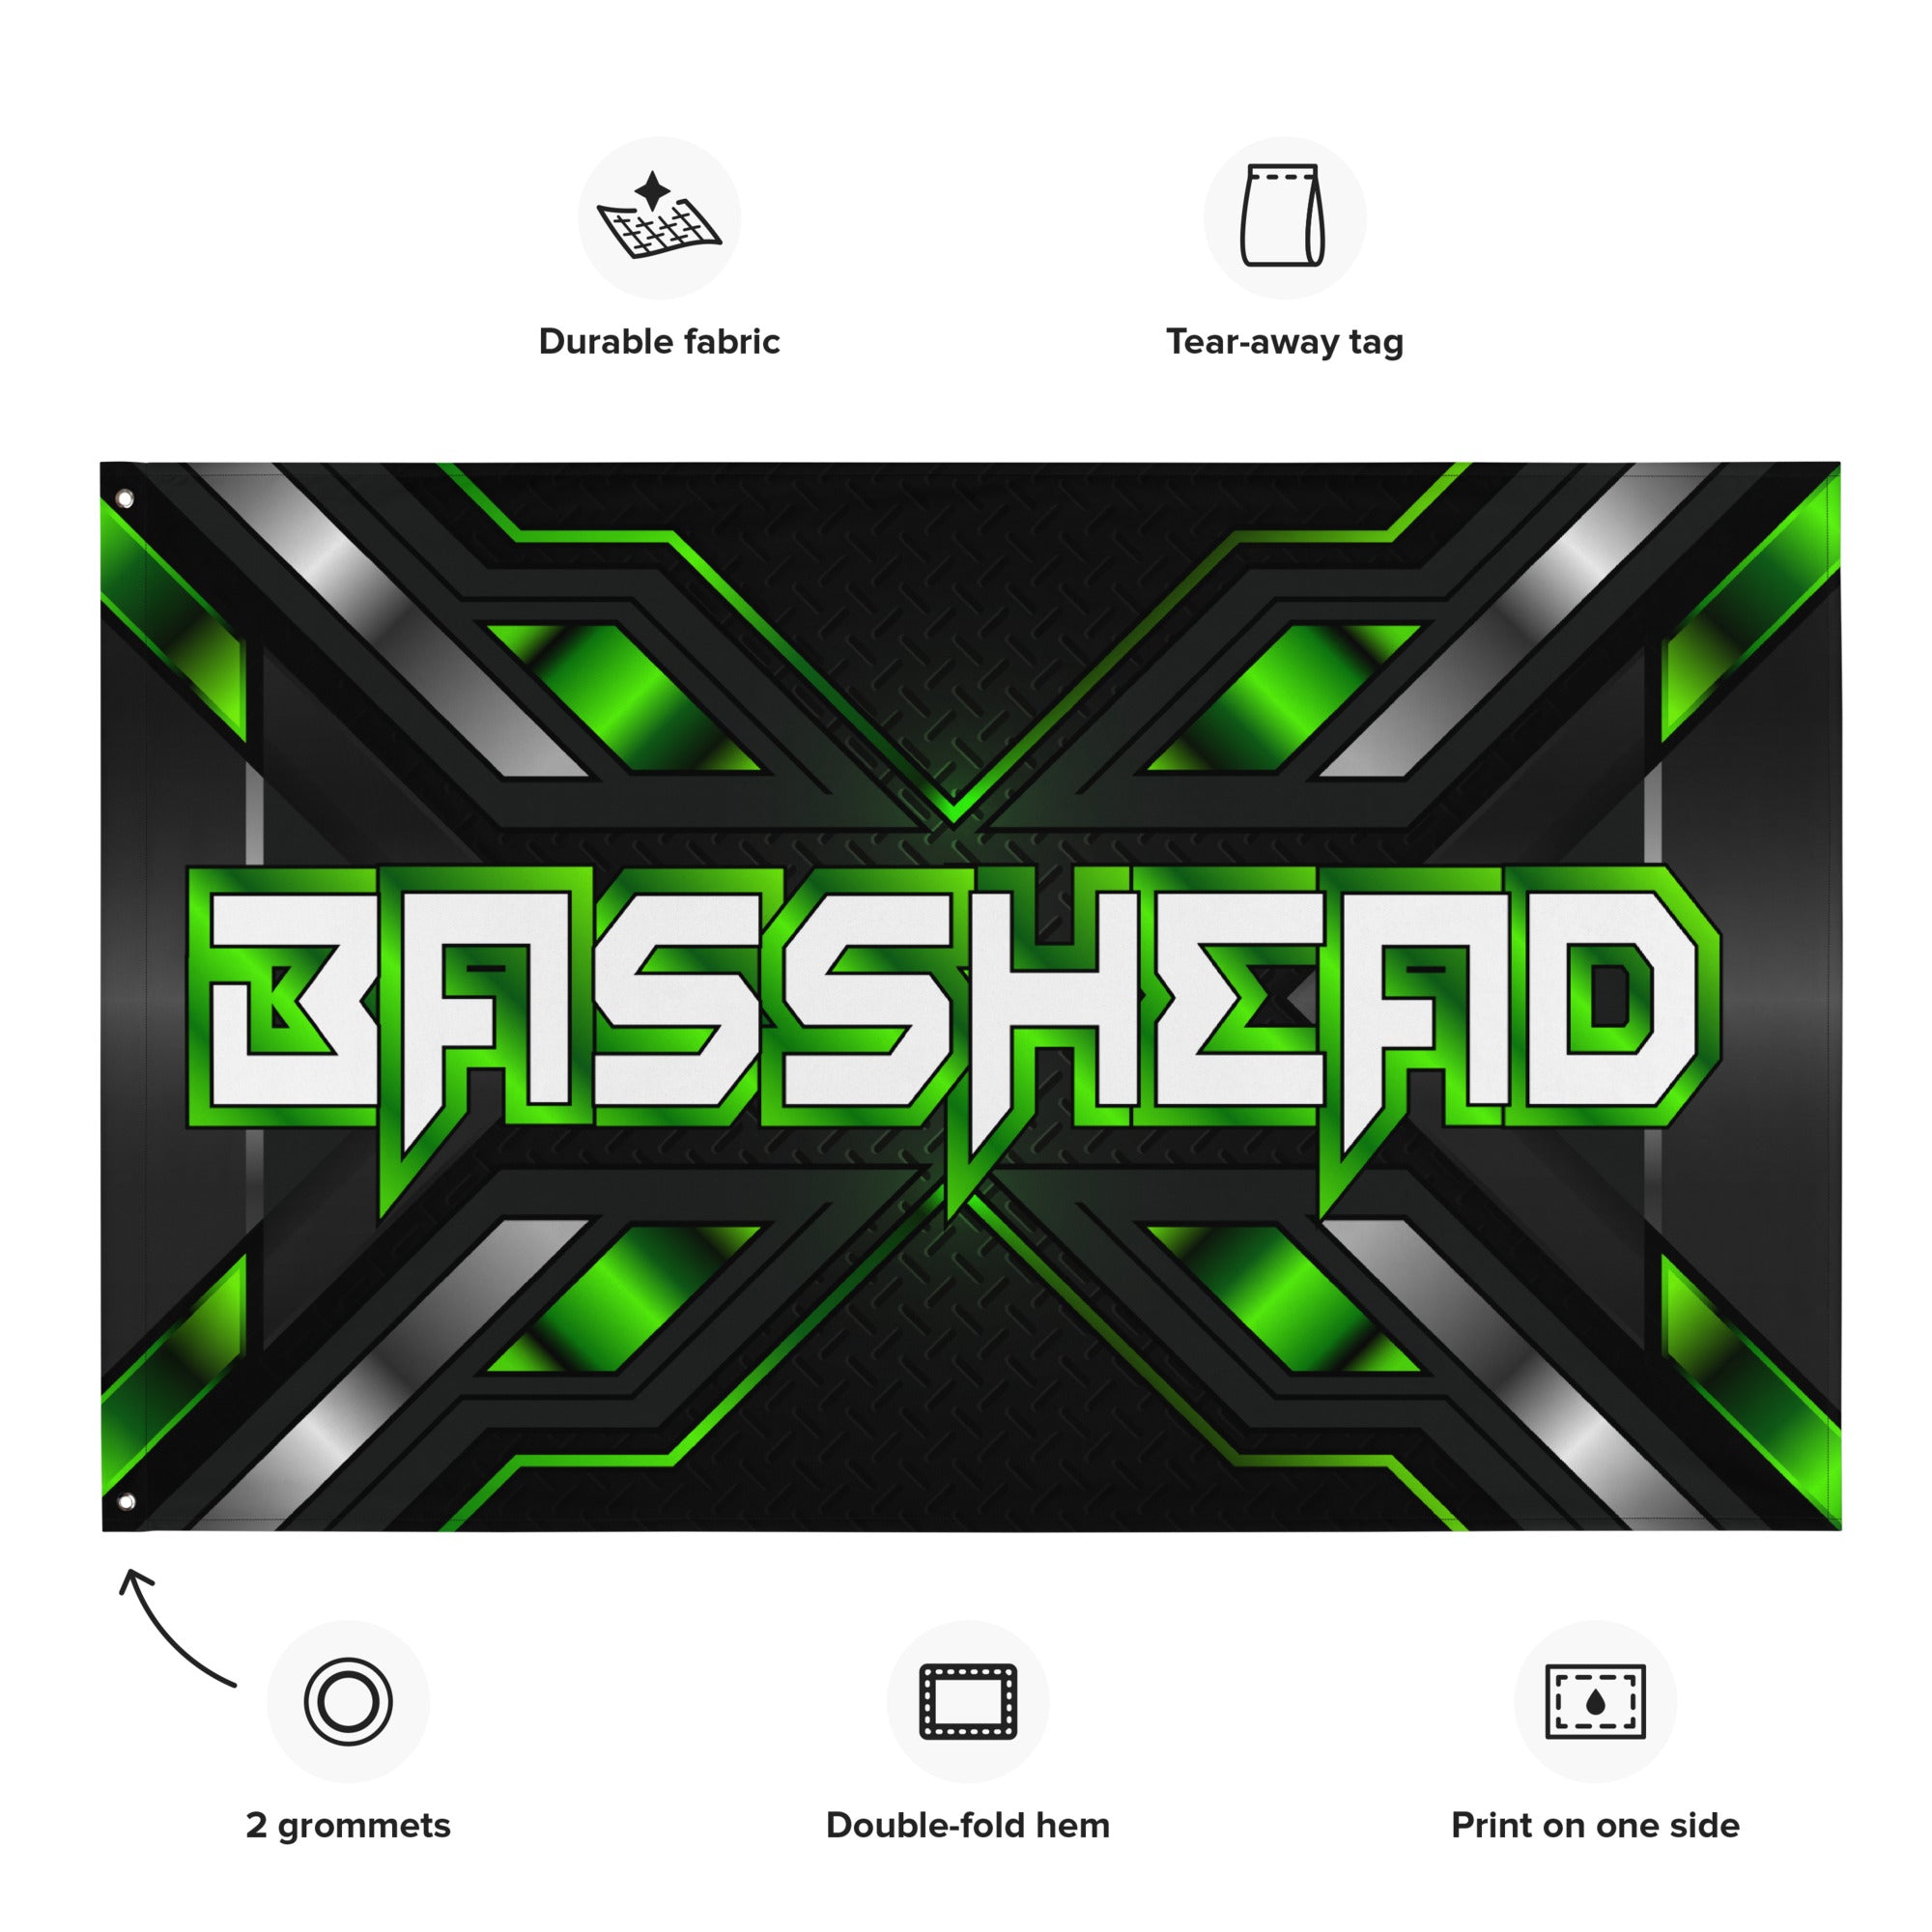 Basshead Rave Flag, Flag, - One Stop Rave